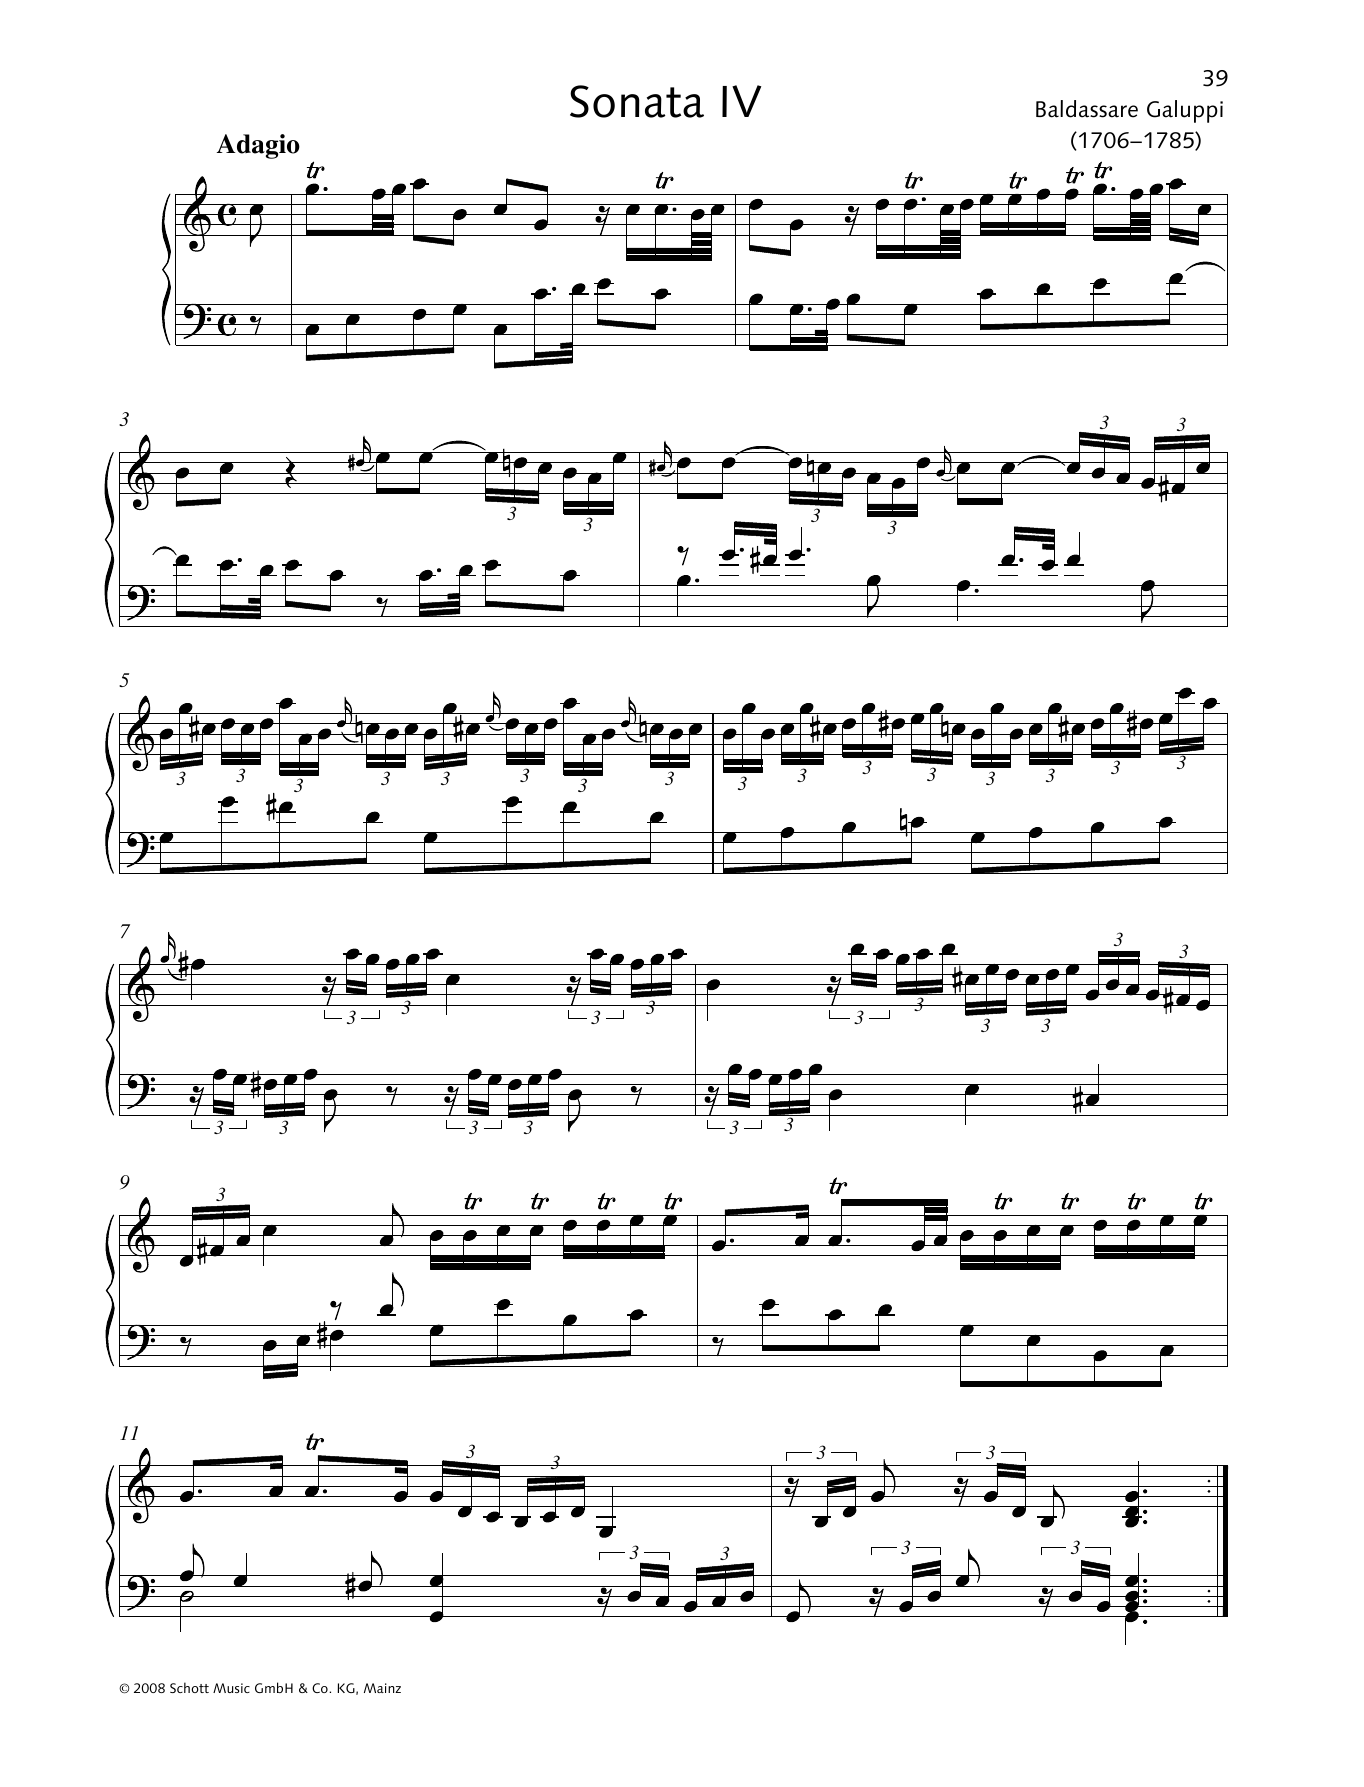 Baldassare Galuppi Sonata IV C major sheet music notes and chords arranged for Piano Solo